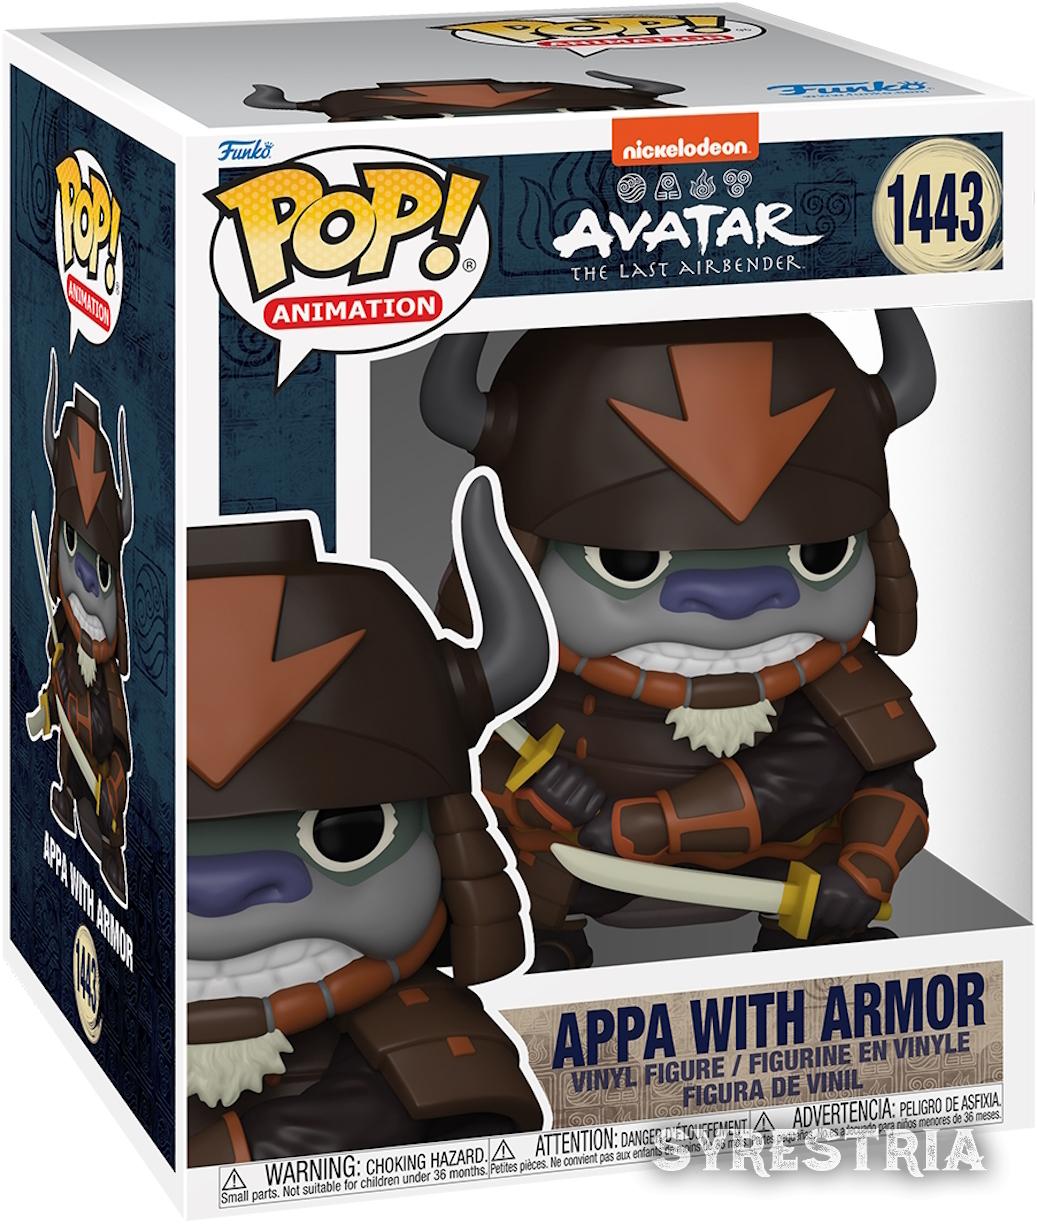 Avatar - Appa with Armor 1443  - Funko Pop! Vinyl Figur